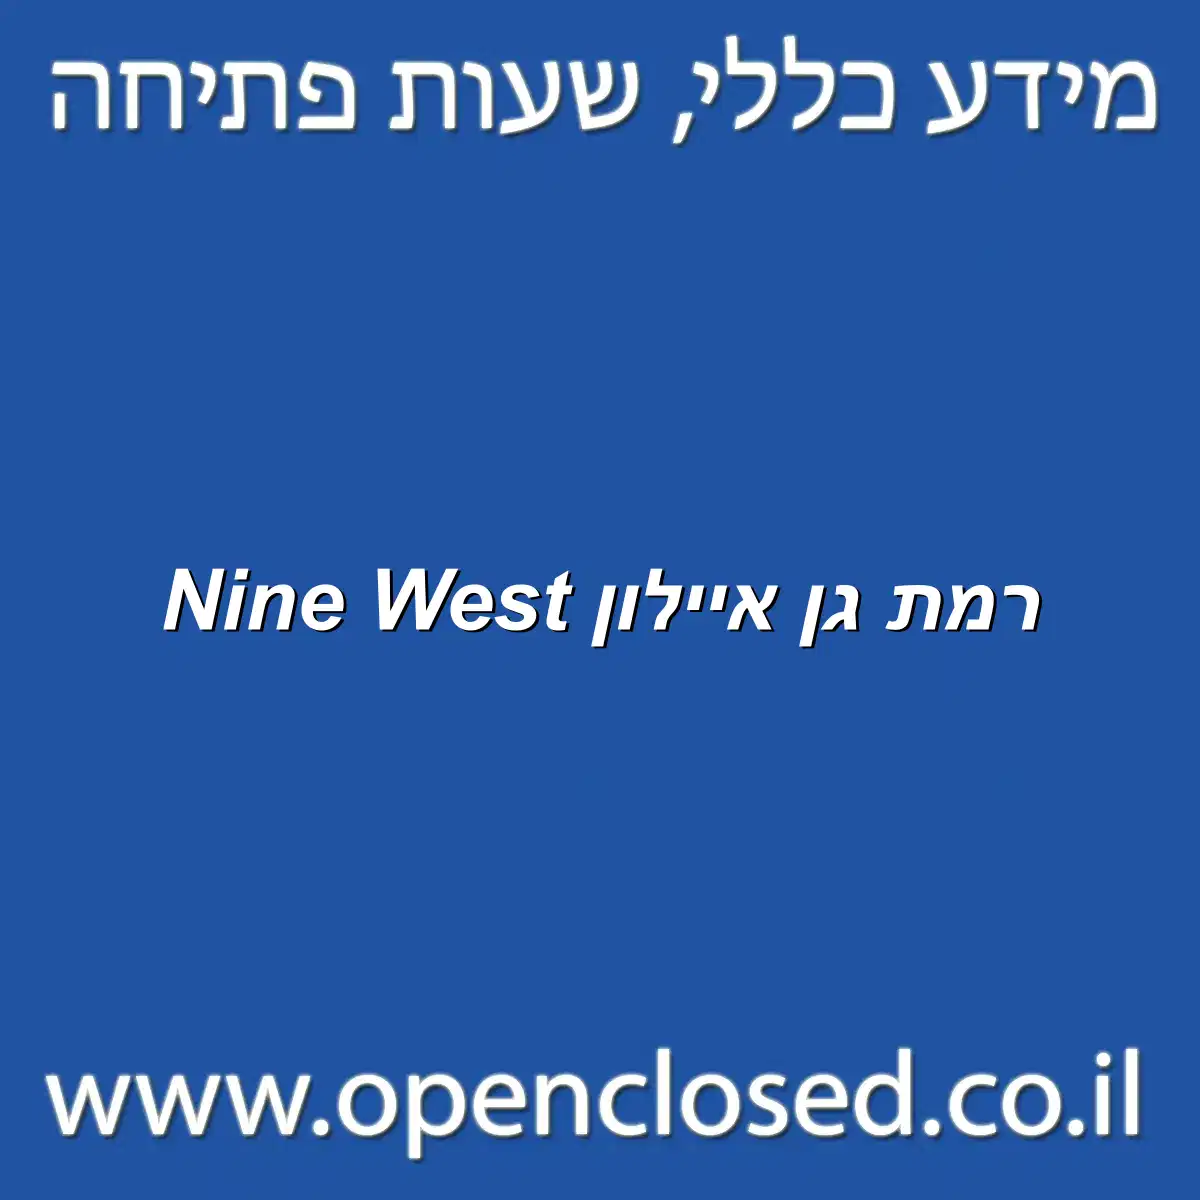 Nine West רמת גן איילון